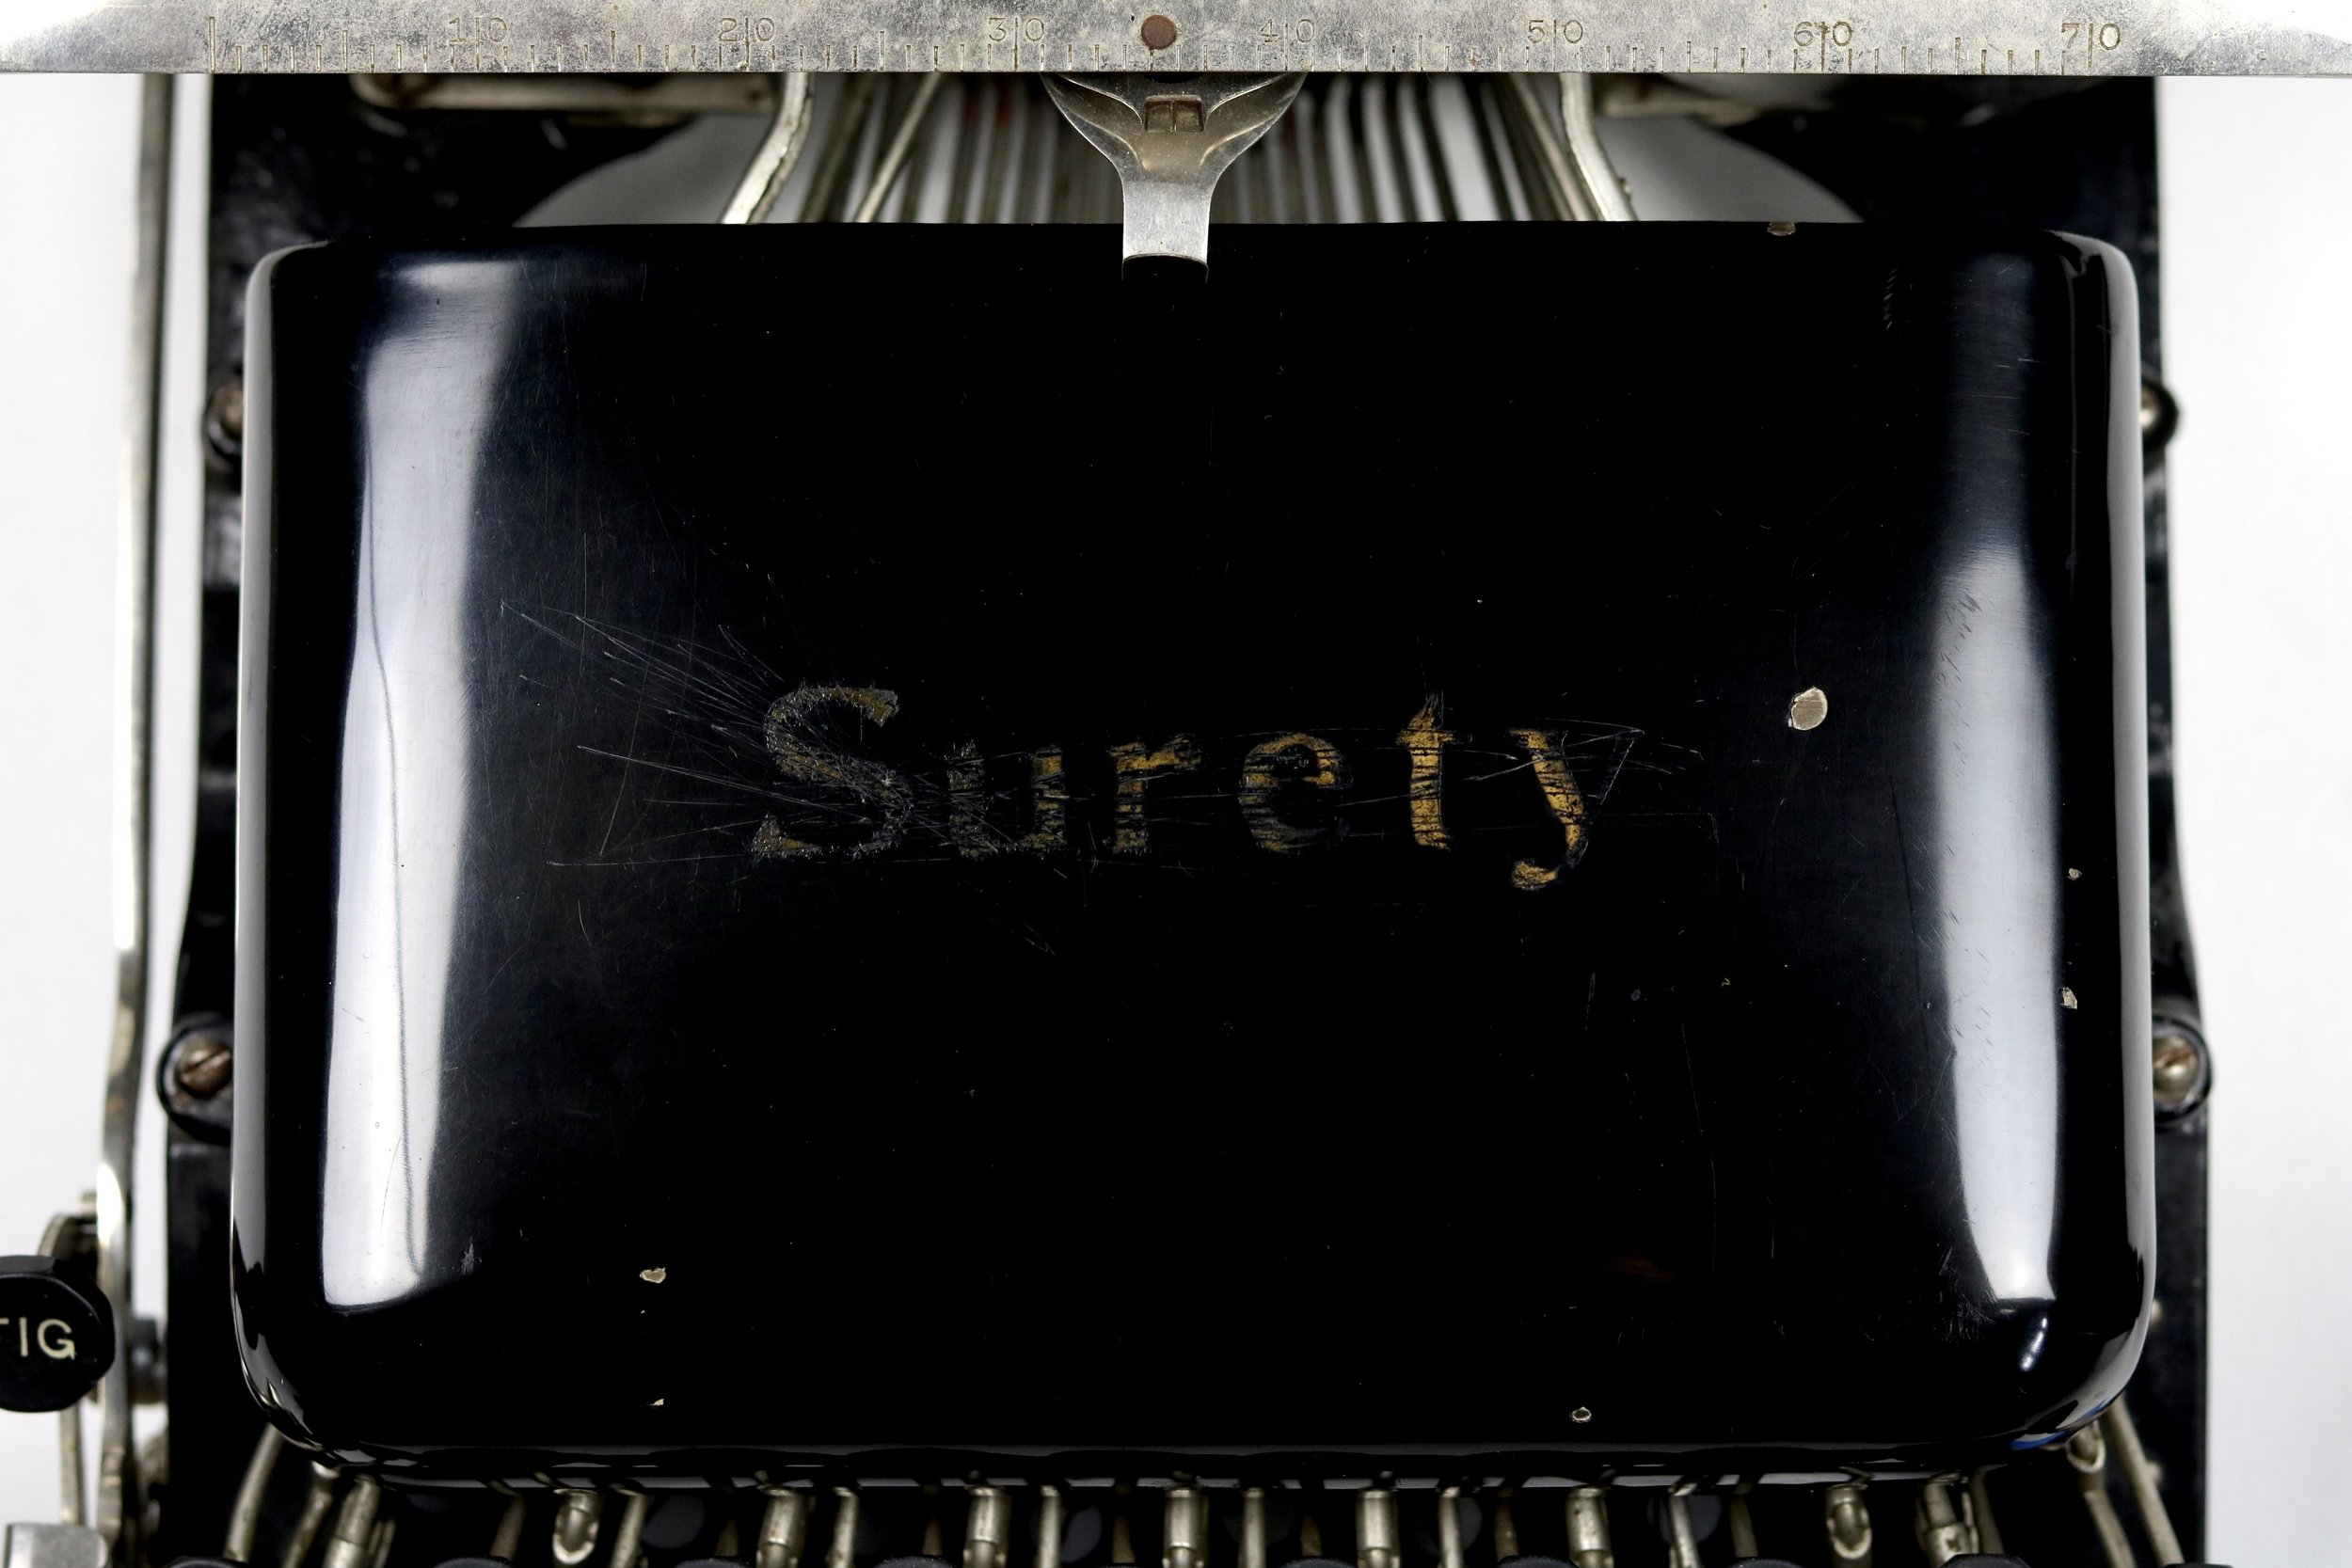 The Surety Model A Typewriter - O'Neil Adams Co. New York - The American Typewriter Co. 265 Broadway, new York